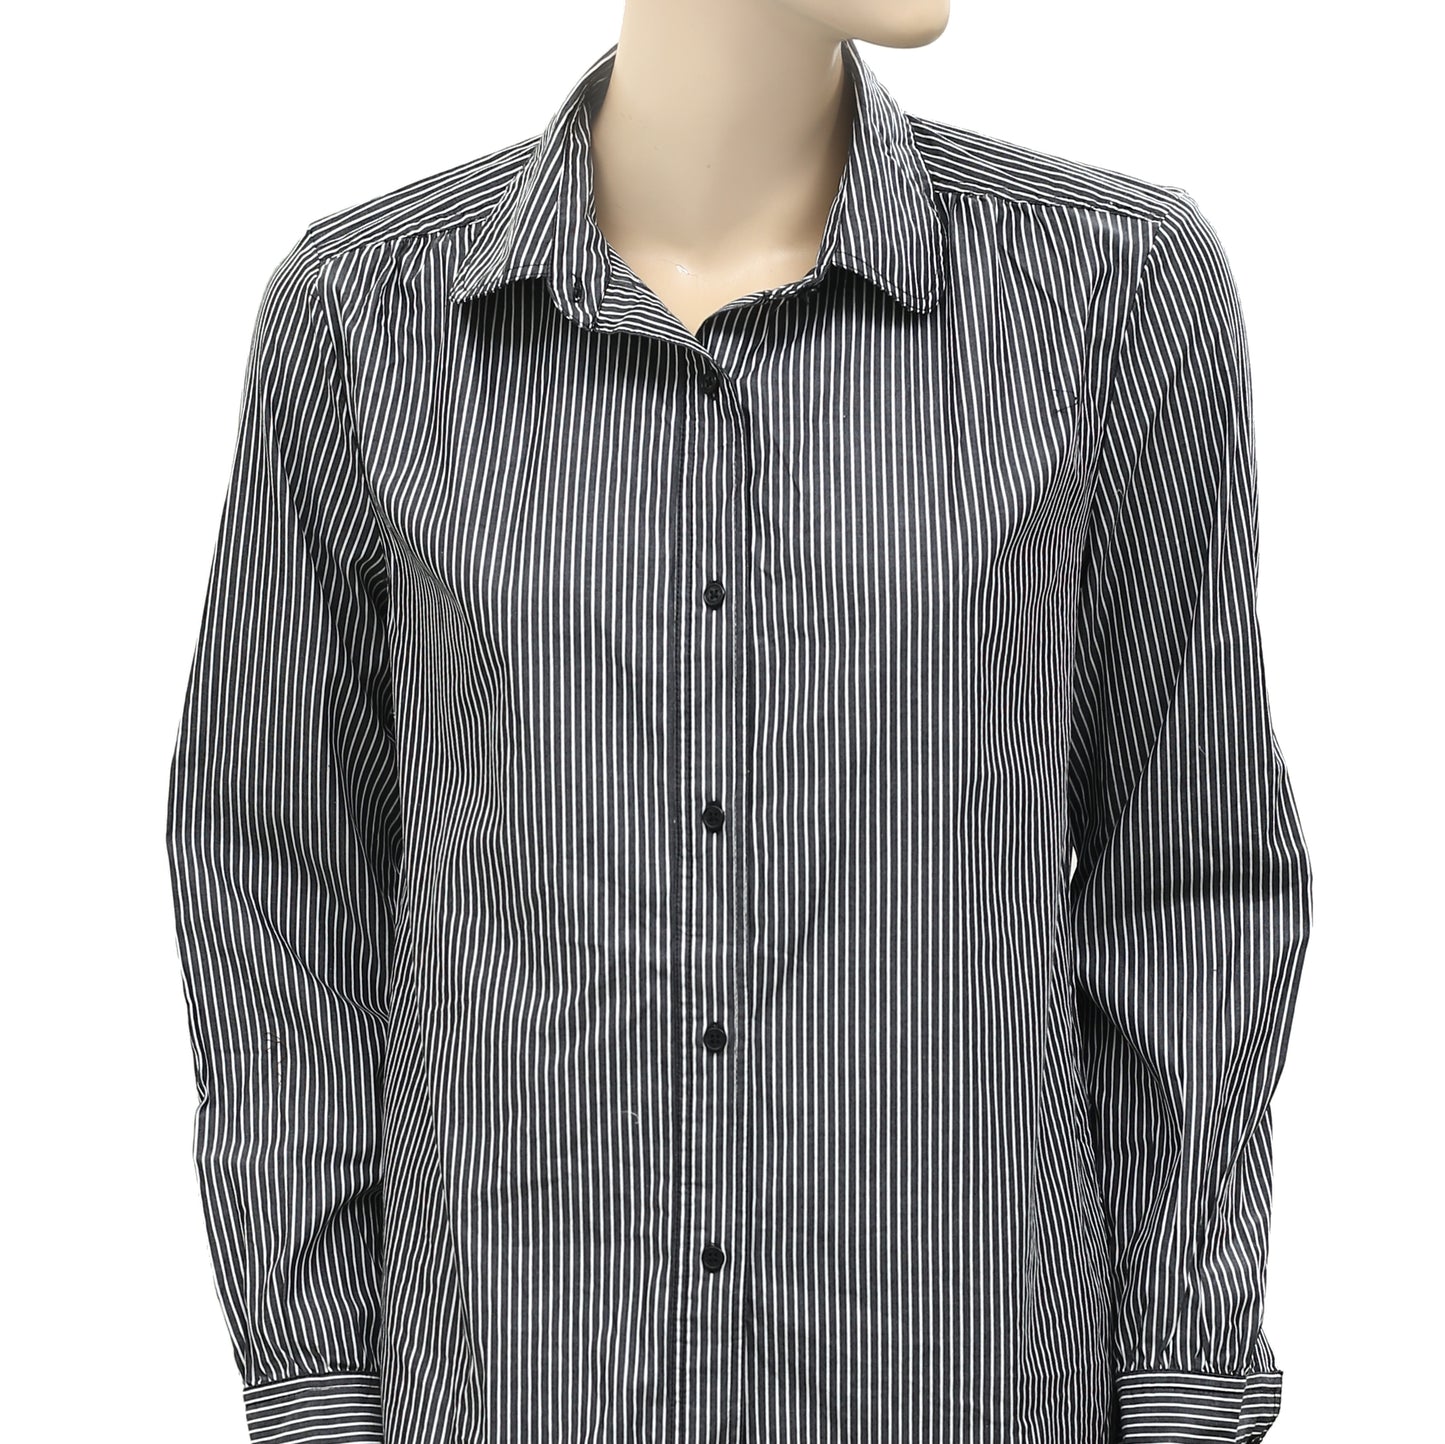 Nili Lotan Striped Printed  Cotton Shirt Top S